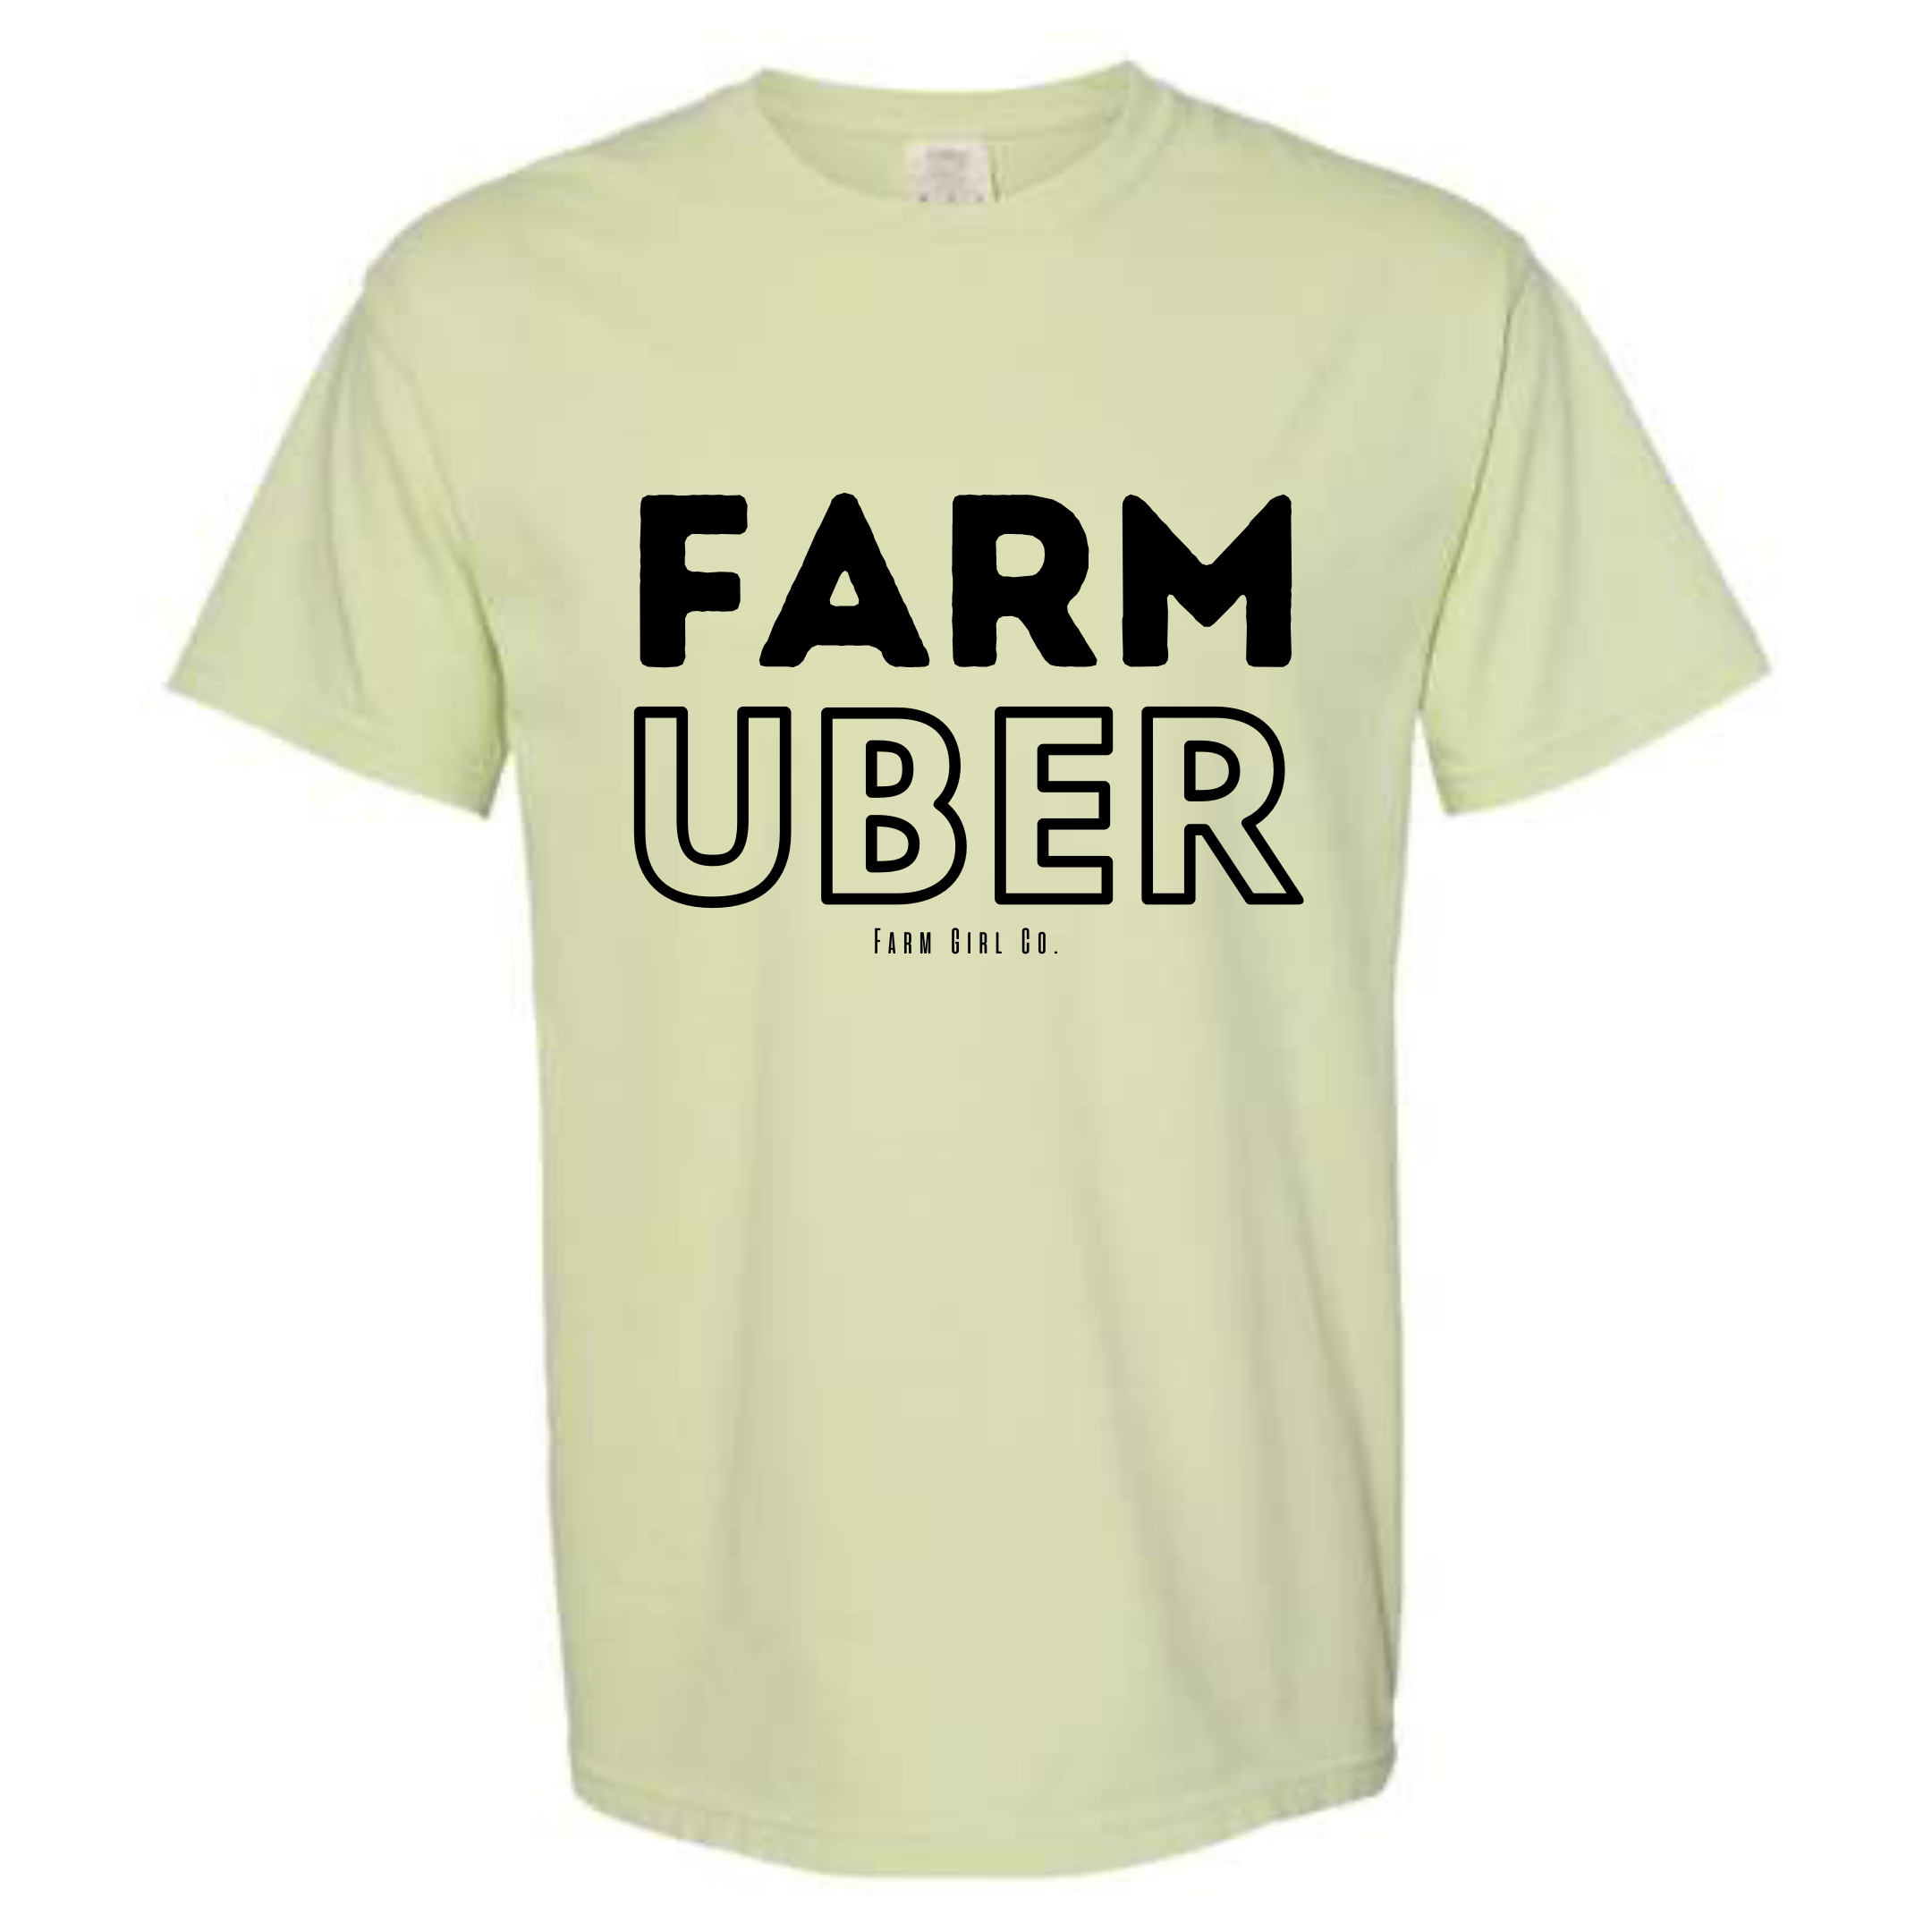 Farm Uber Graphic Tee